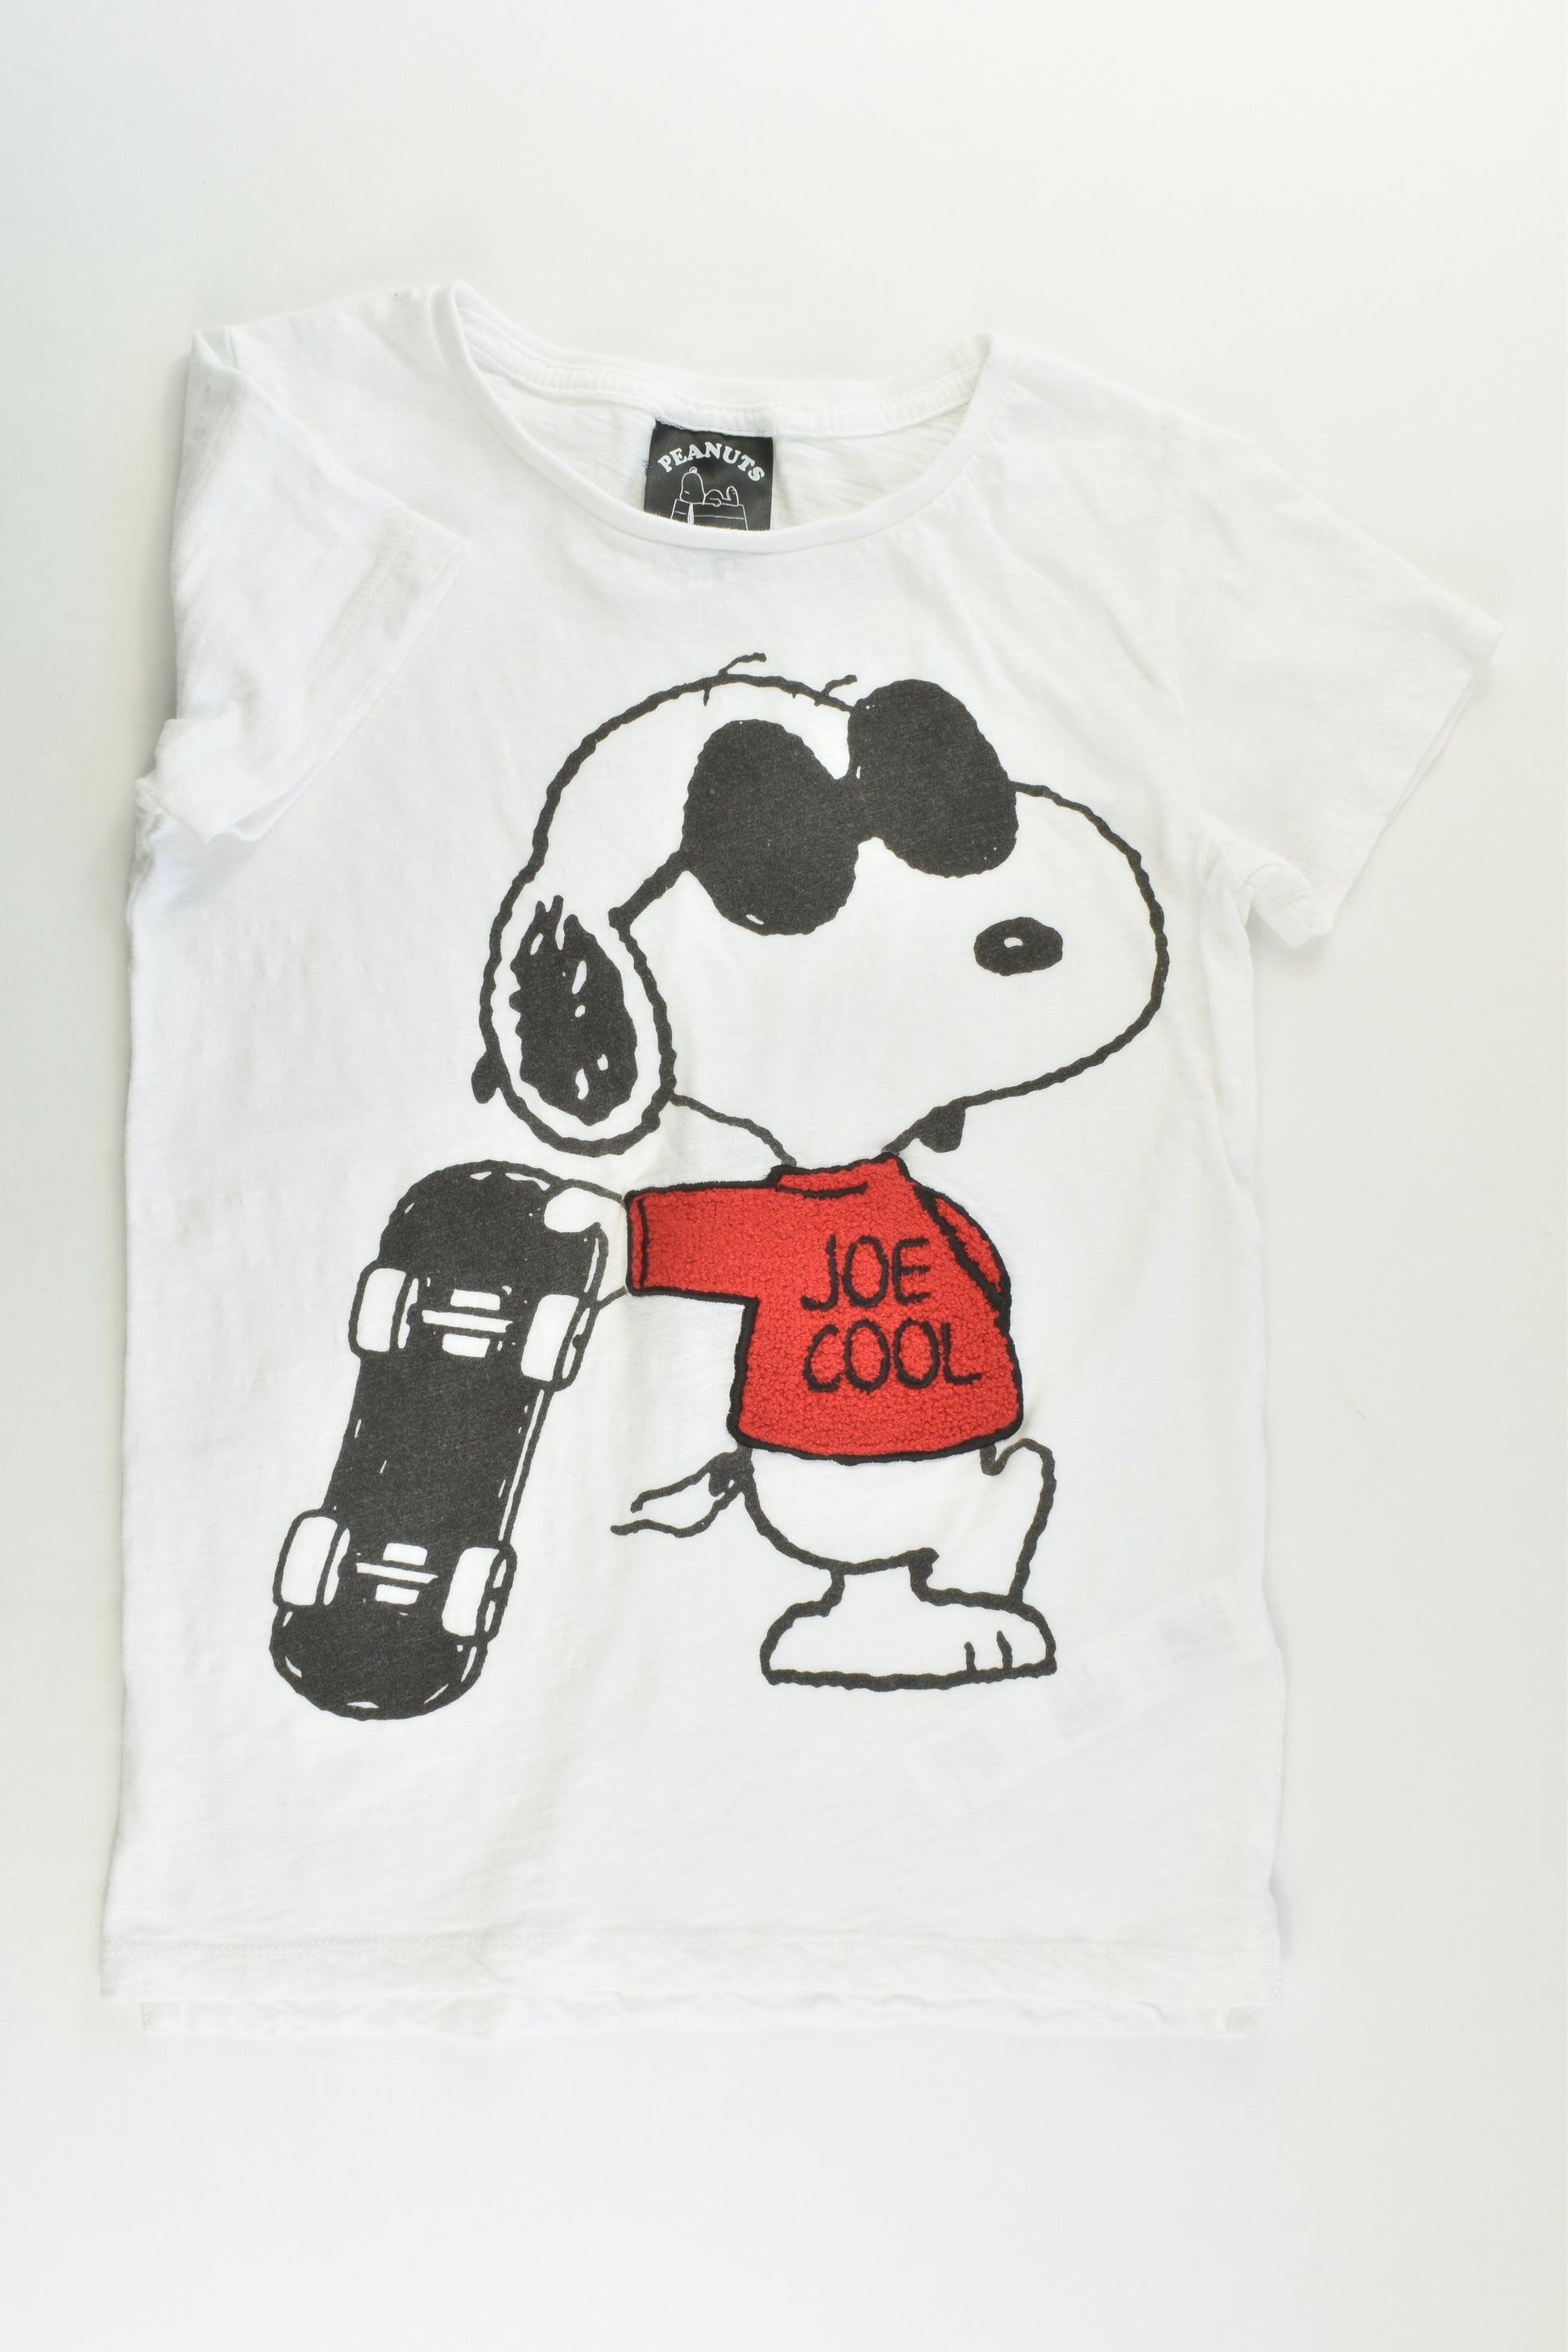 Peanuts by Cotton On Kids Size 8 'Joe Cool' T-shirt